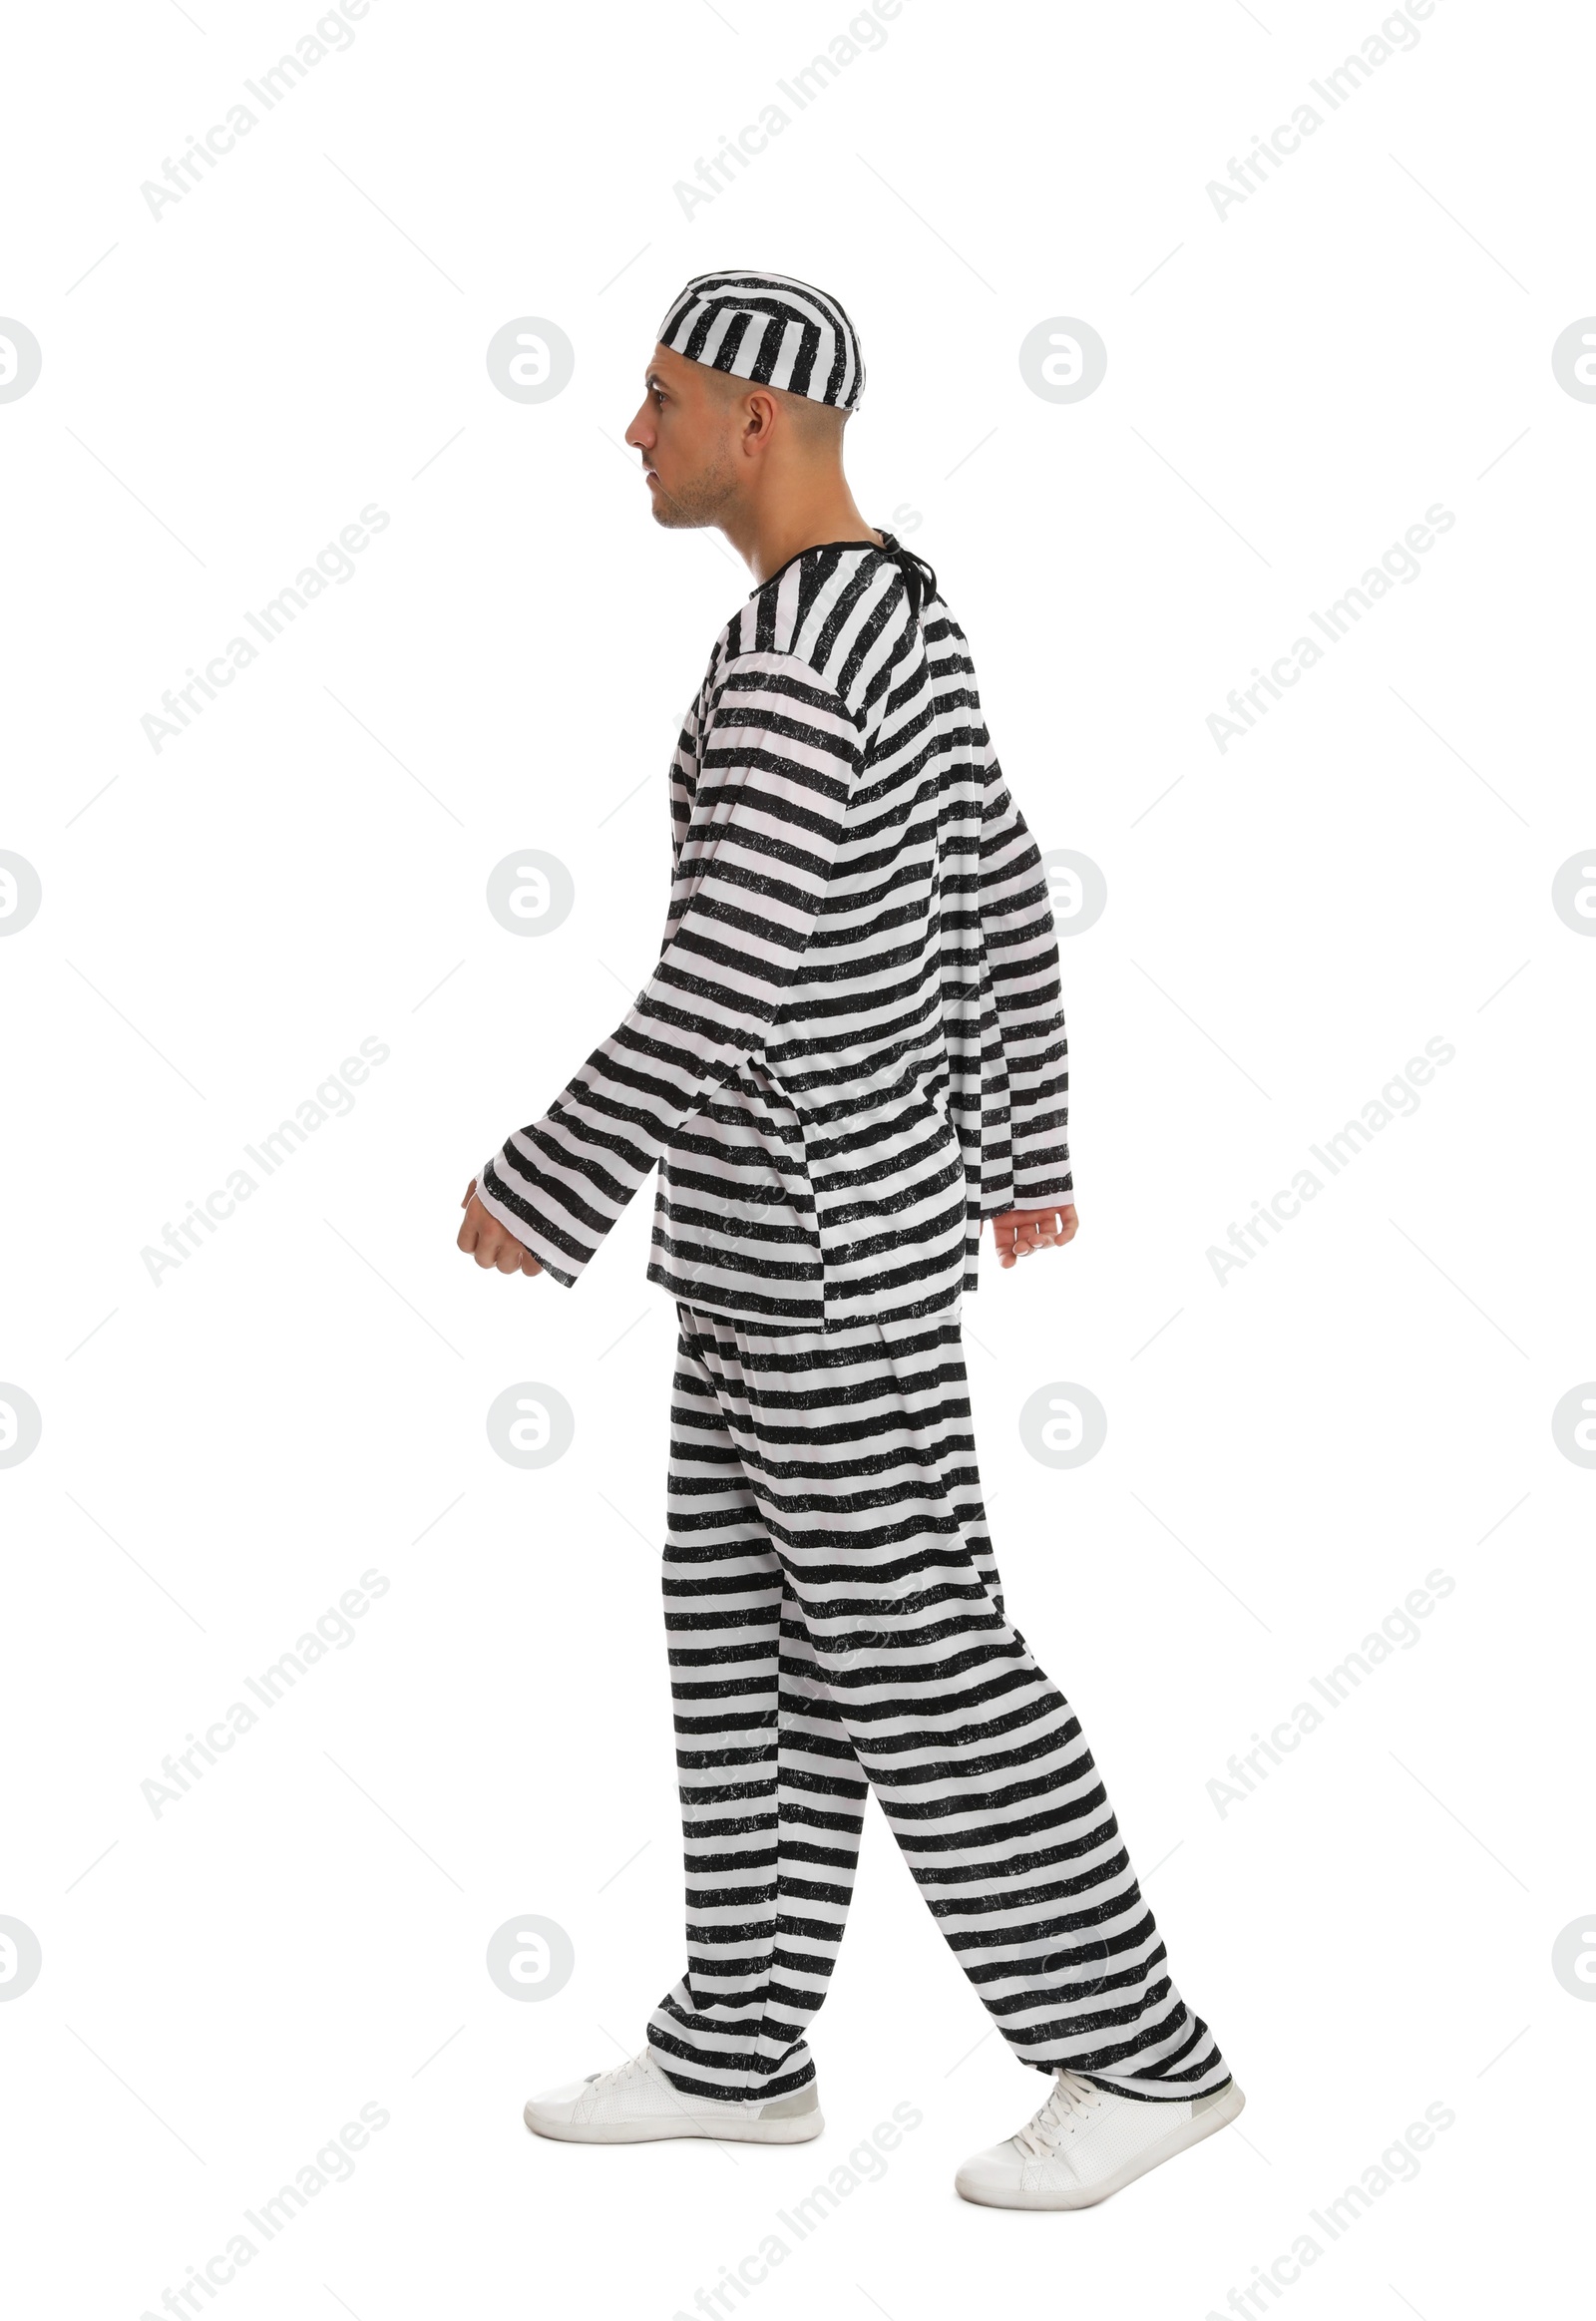 Photo of Prisoner in striped uniform on white background